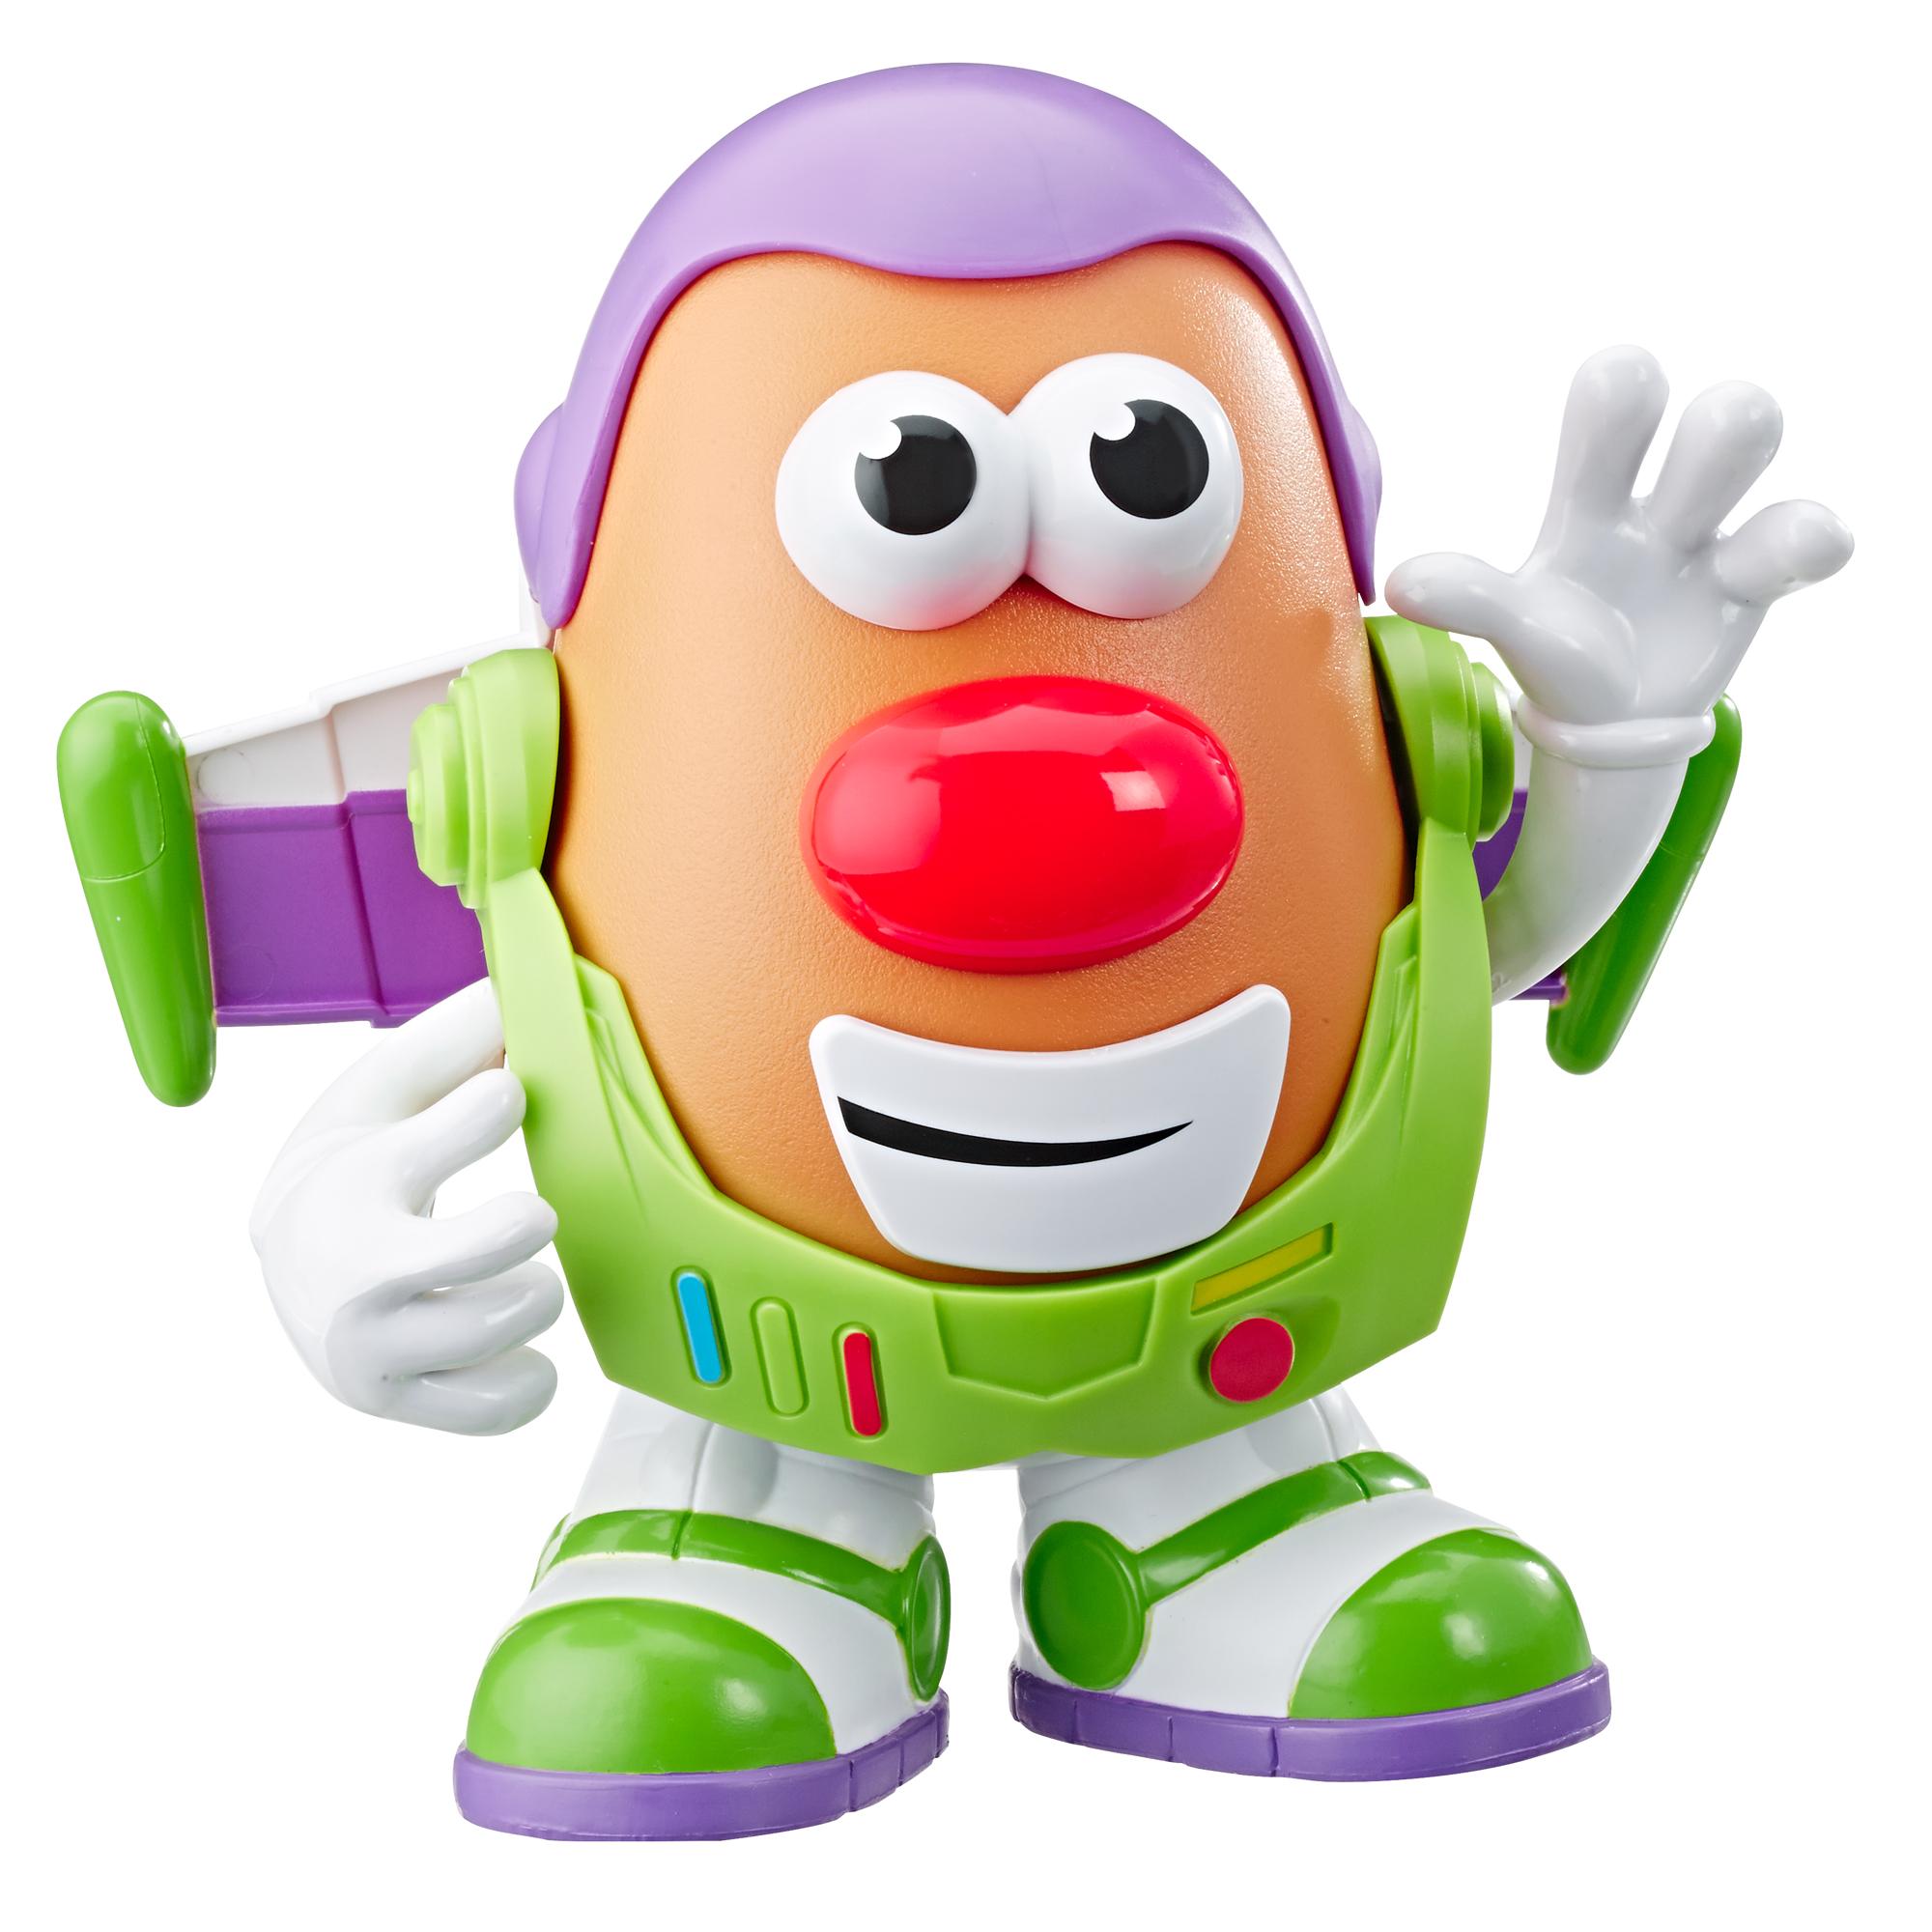 DisneyPixar Toy Story 4 Mrs. Potato Head Figure with UK